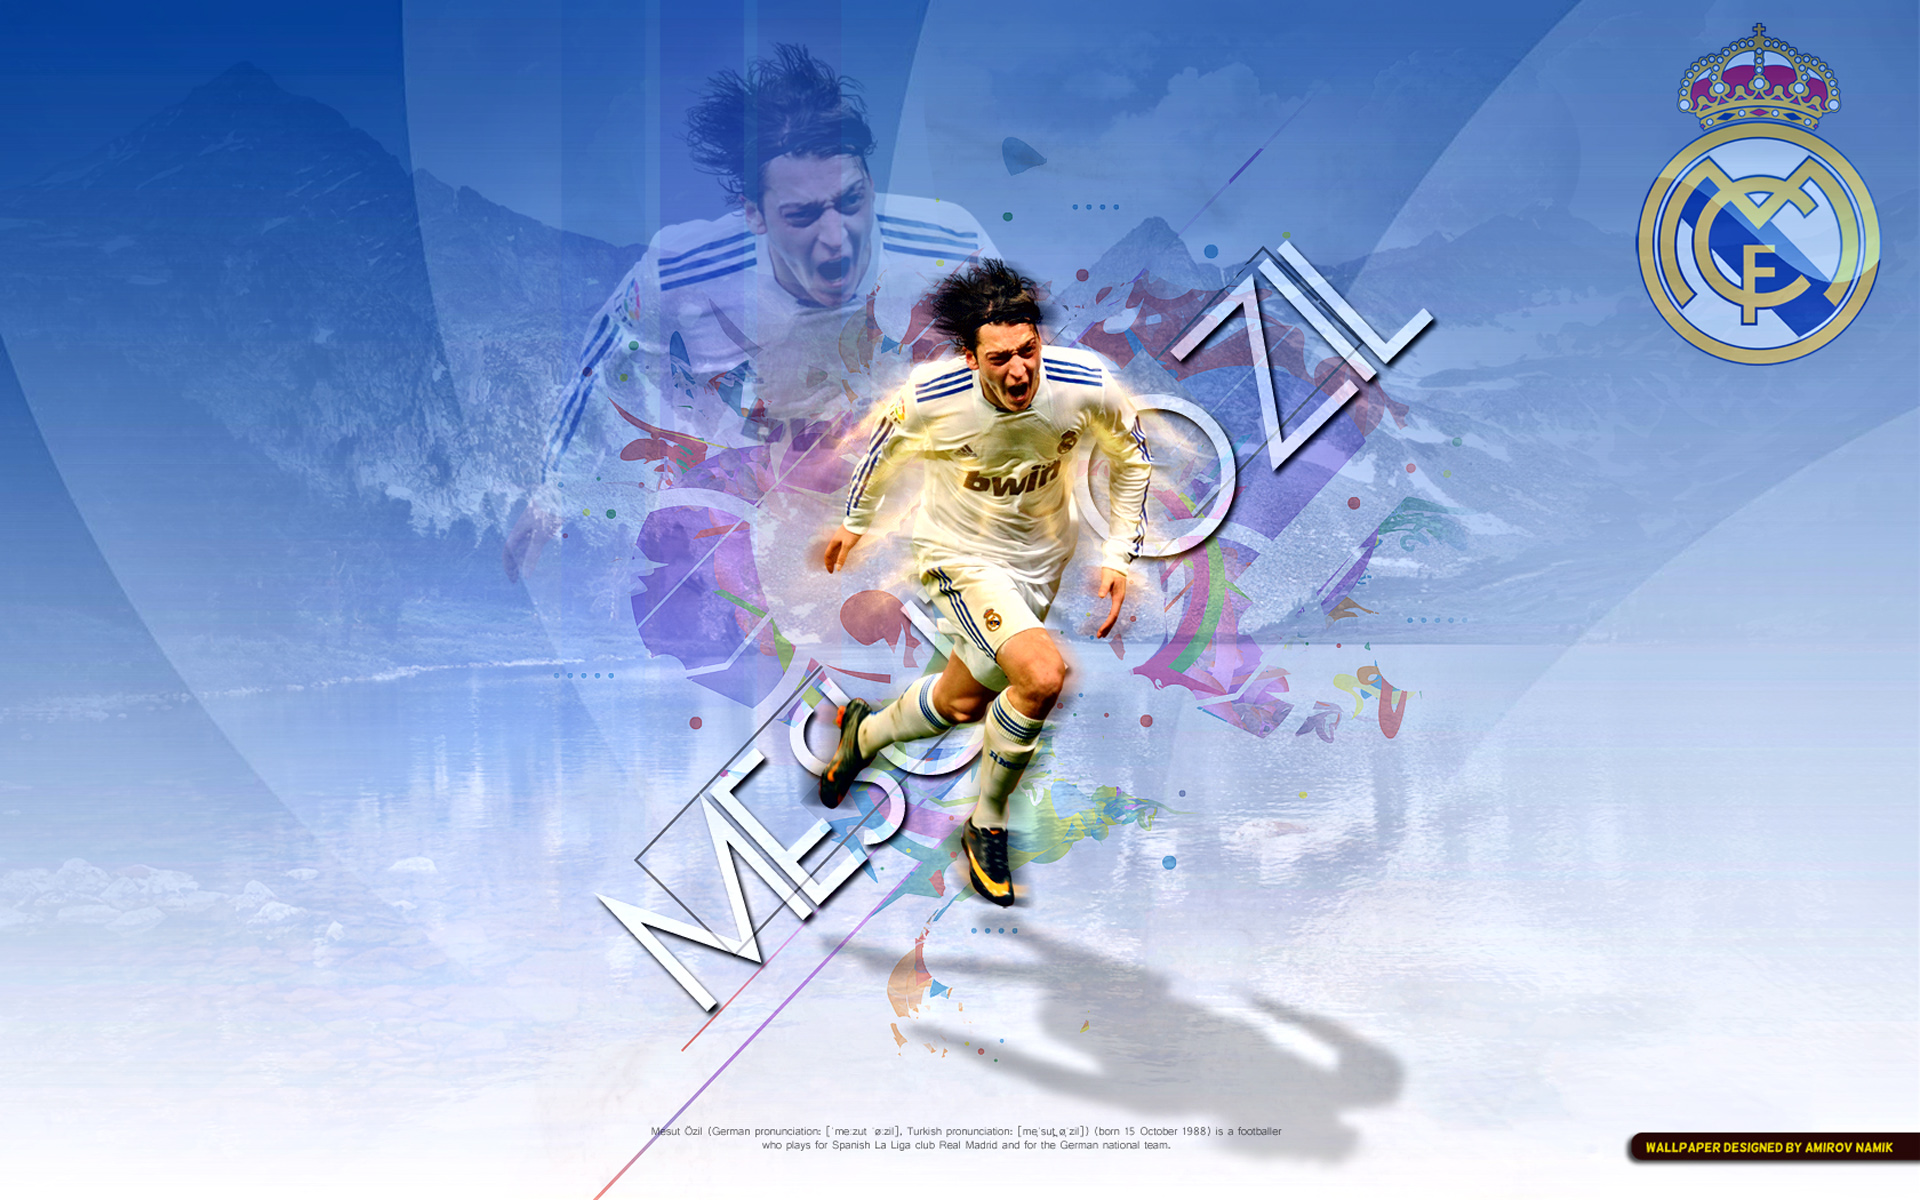 Descarga gratuita de fondo de pantalla para móvil de Fútbol, Mesut Özil, Deporte, Real Madrid C F.